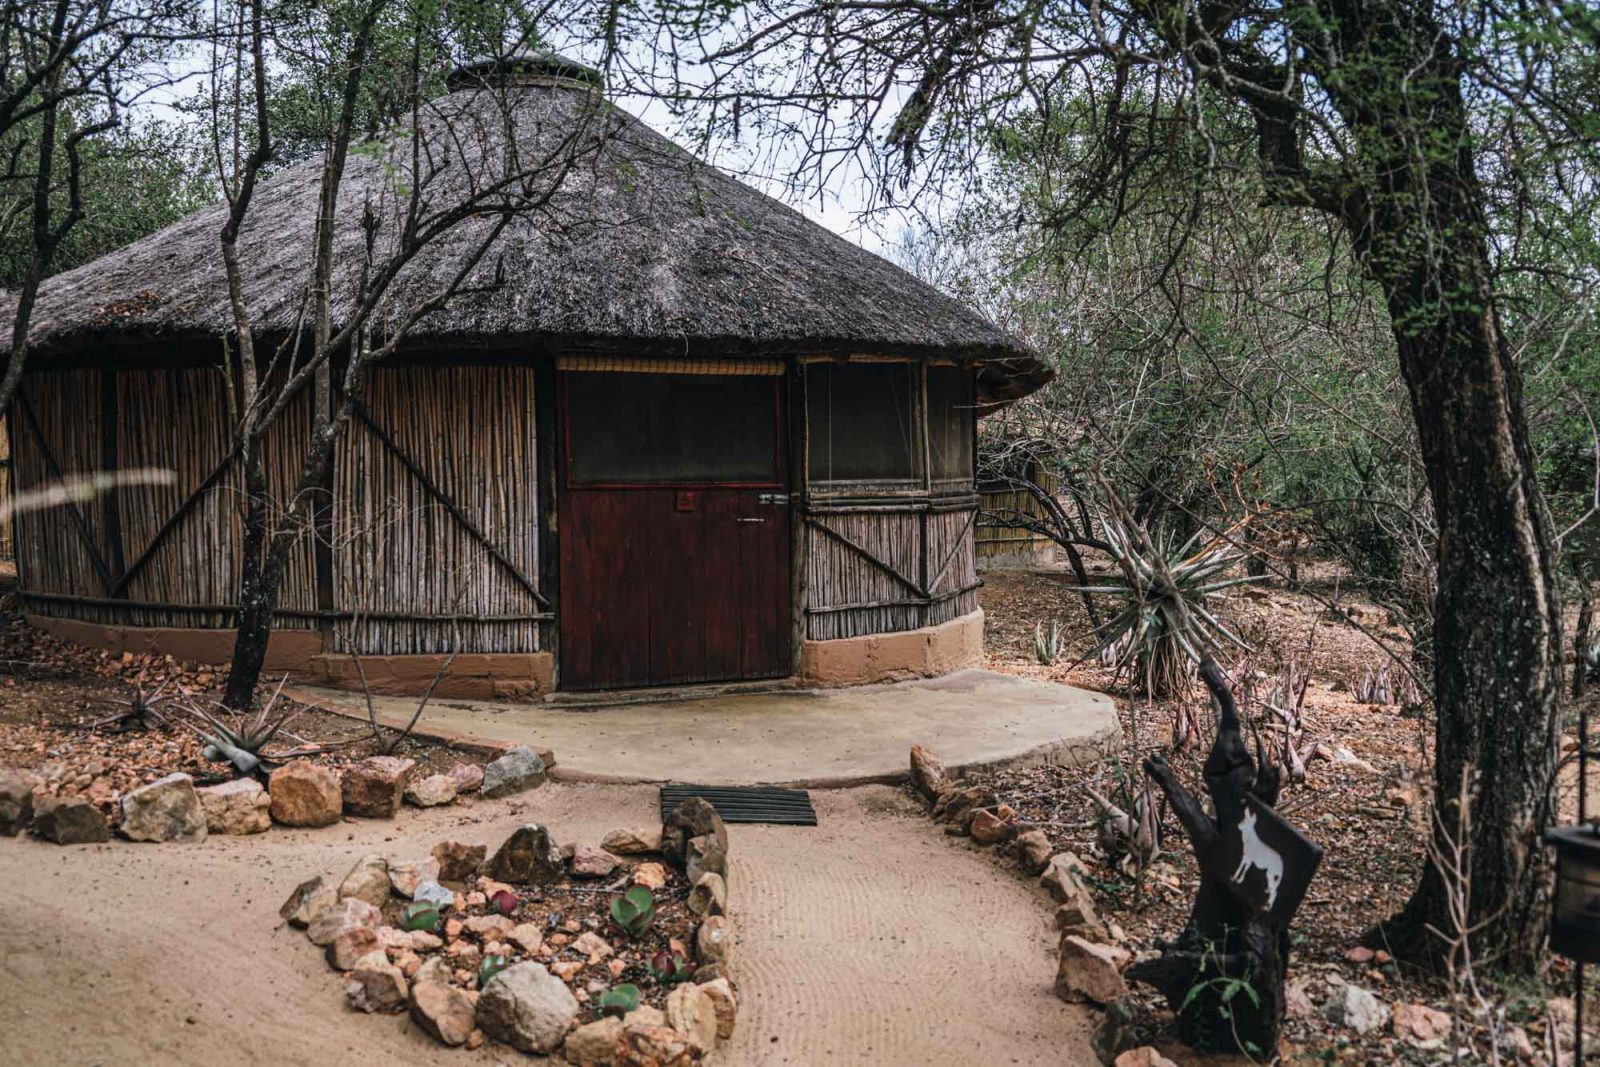 The huts at Umlani Bush Camp, safari lodges in South Africa